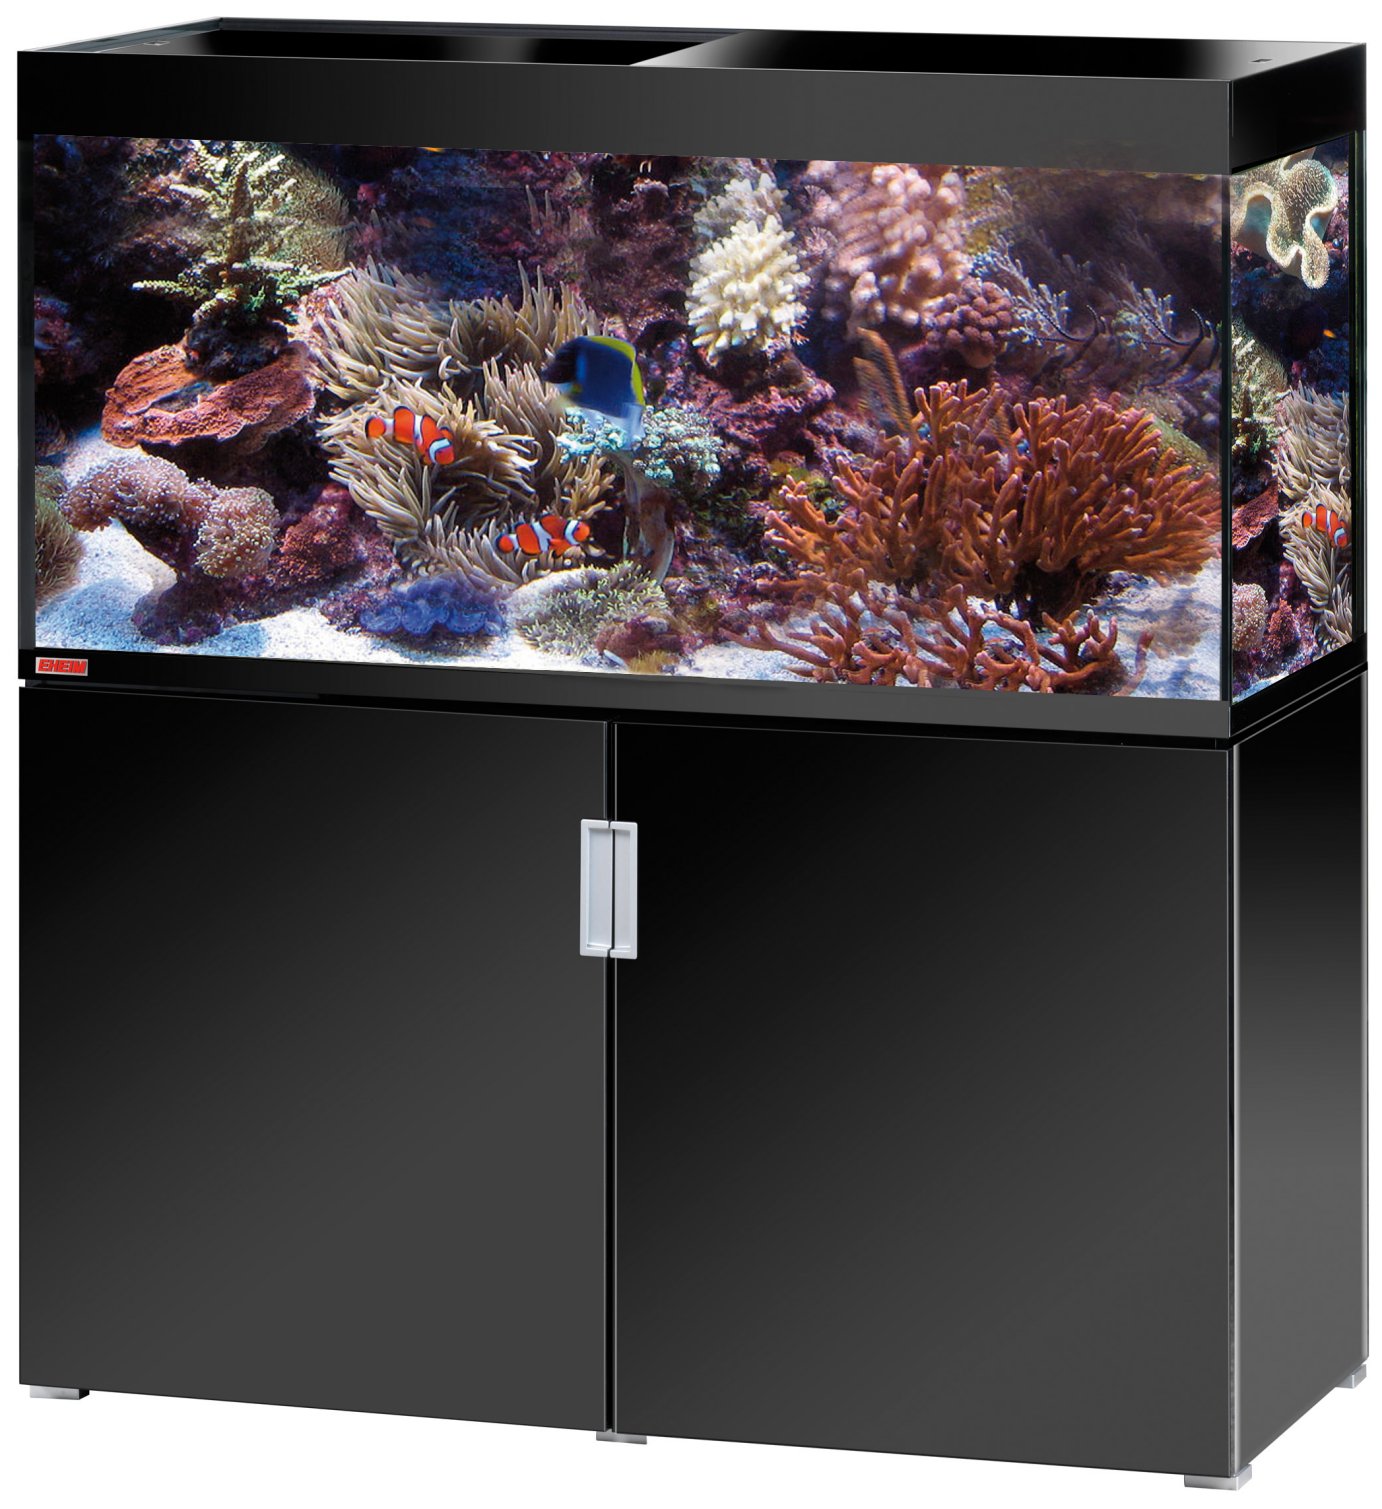 eheim-incpiria-marine-400-led-noir-brillant-kit-aquarium-130-cm-400-l-avec-meuble-et-eclairage-leds